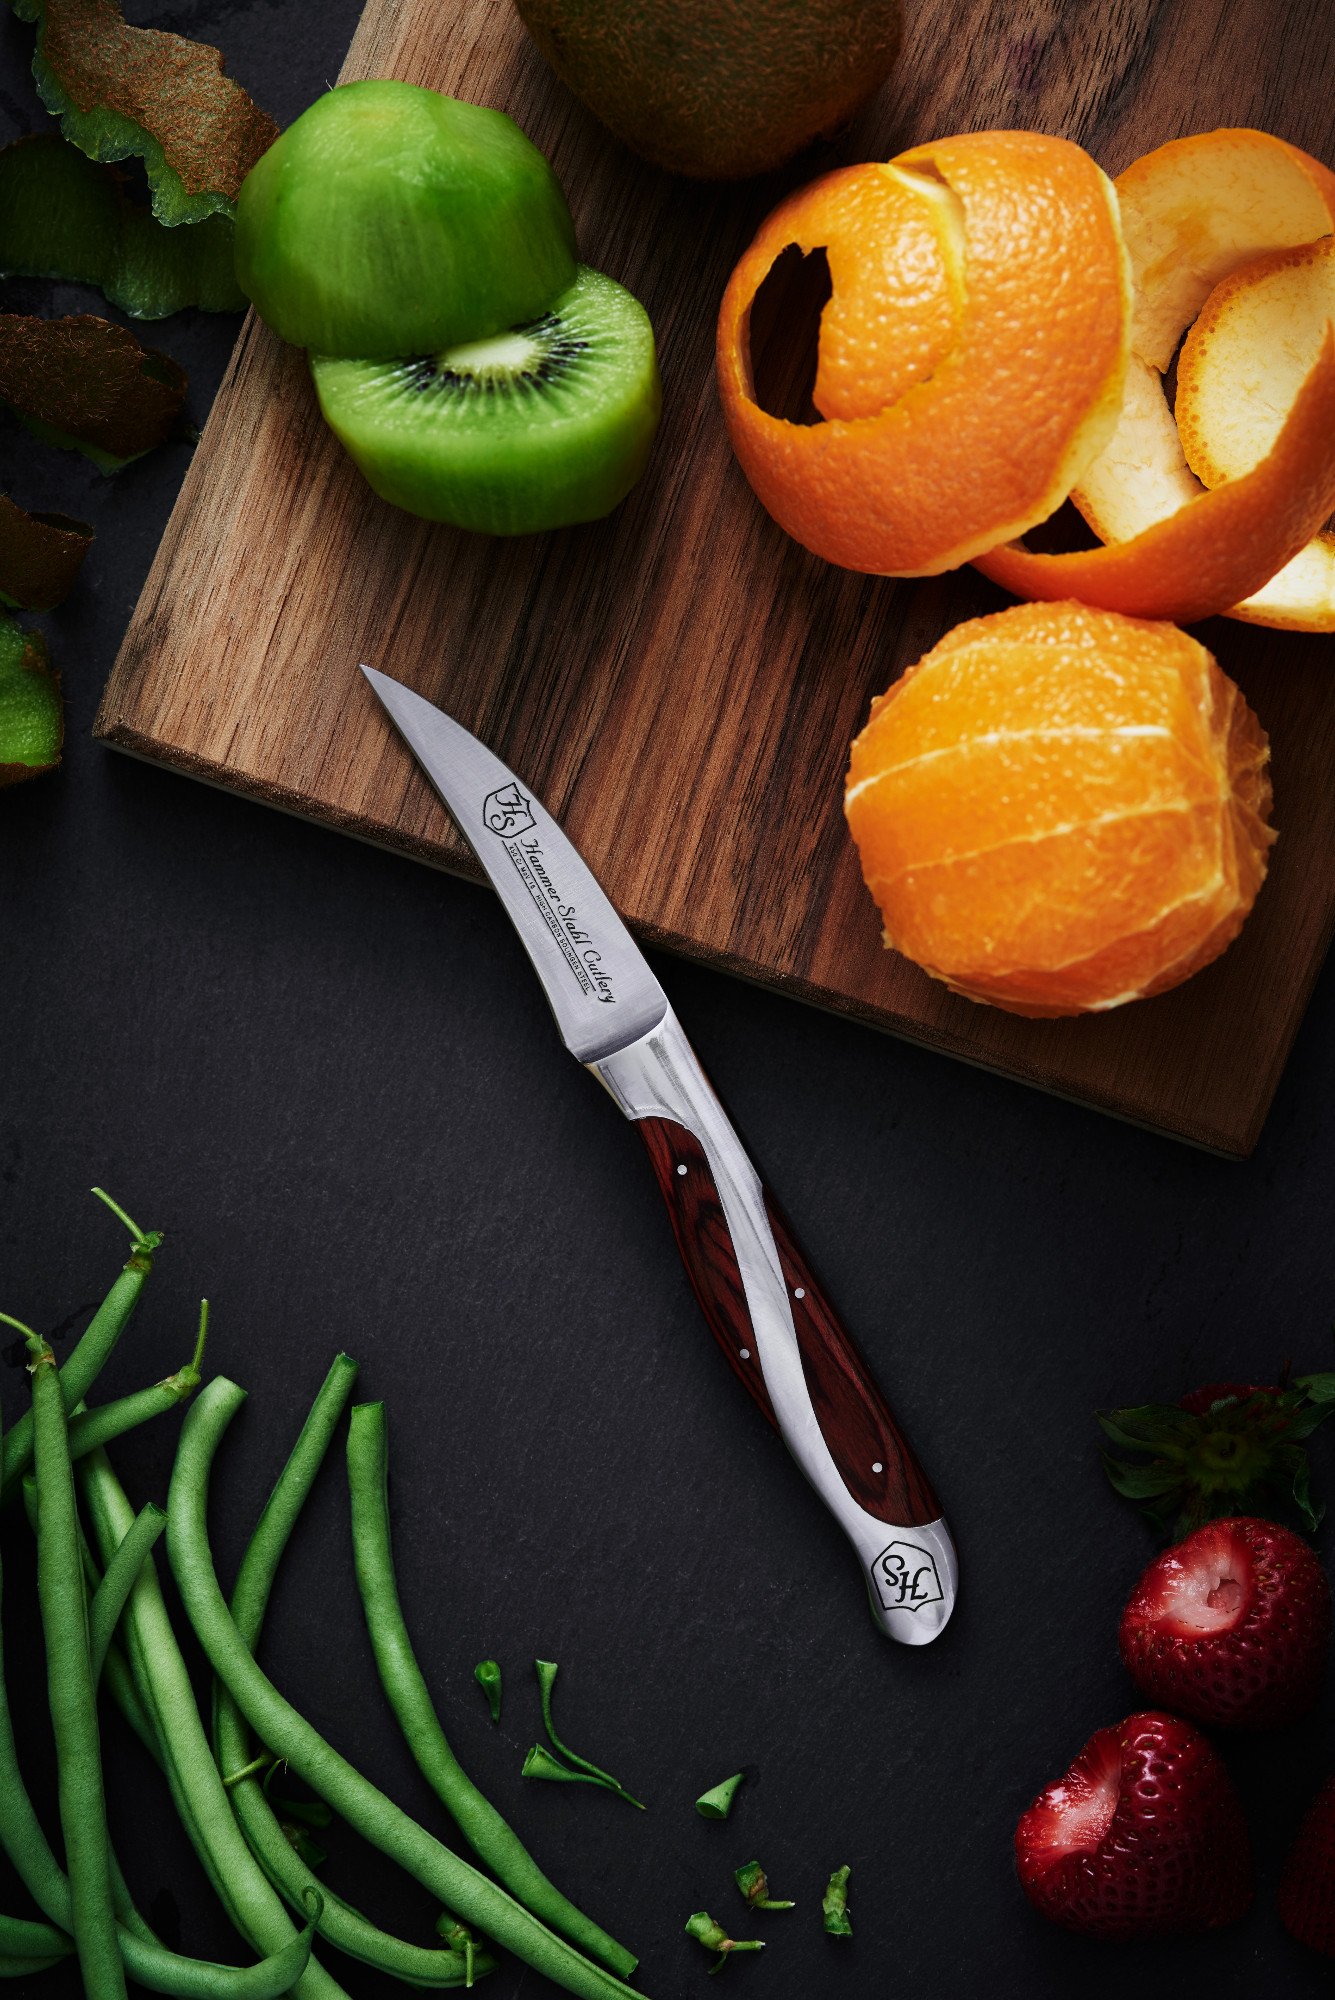 Hammer Stahl Bird's Beak Paring Knife - German High Carbon Steel - Sharp Small Kitchen Knife for Vegetables and Fruits - Ergonomic Quad-Tang Pakkawood Handle